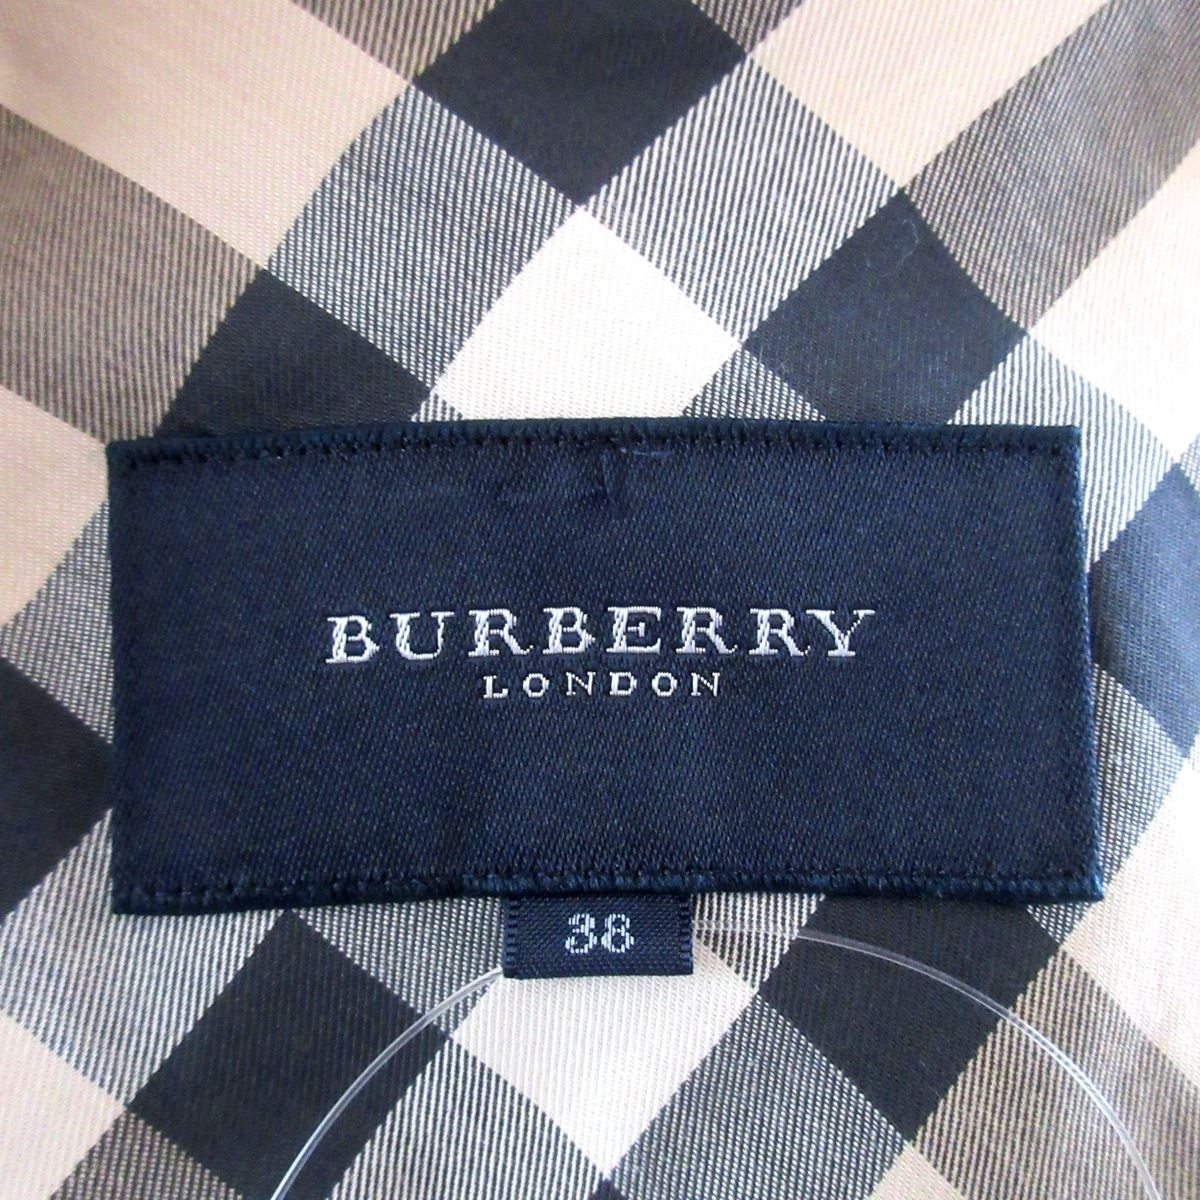 Burberry LONDON(バーバリーロンドン) ワンピース サイズ38 L ...